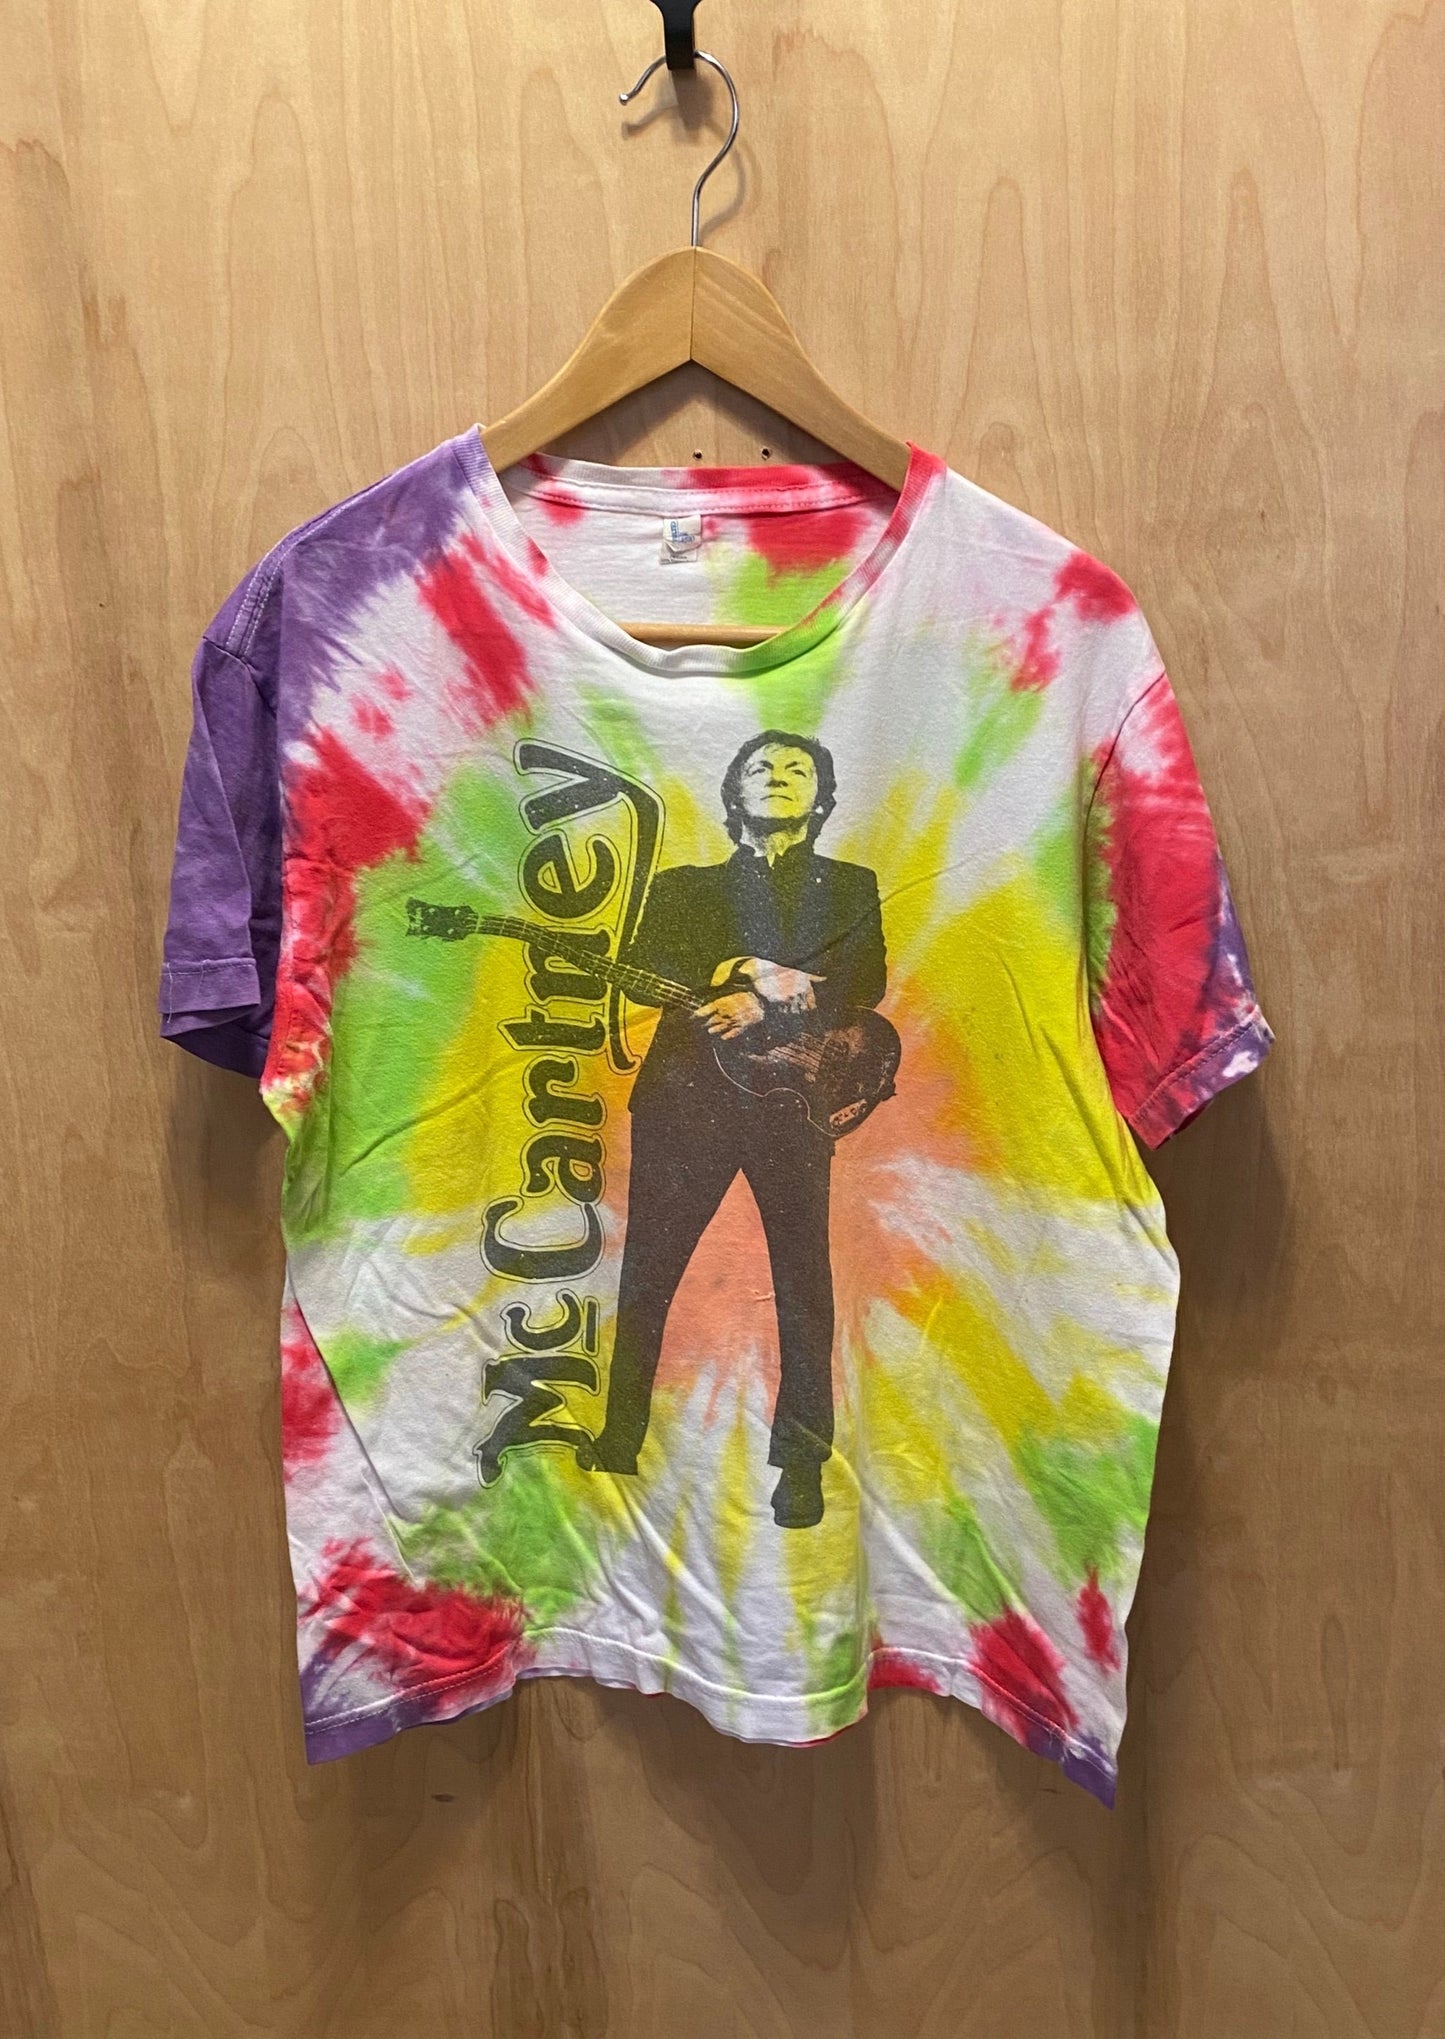 Camiseta teñida de la gira On the Run de Paul McCartney 2011 (M)